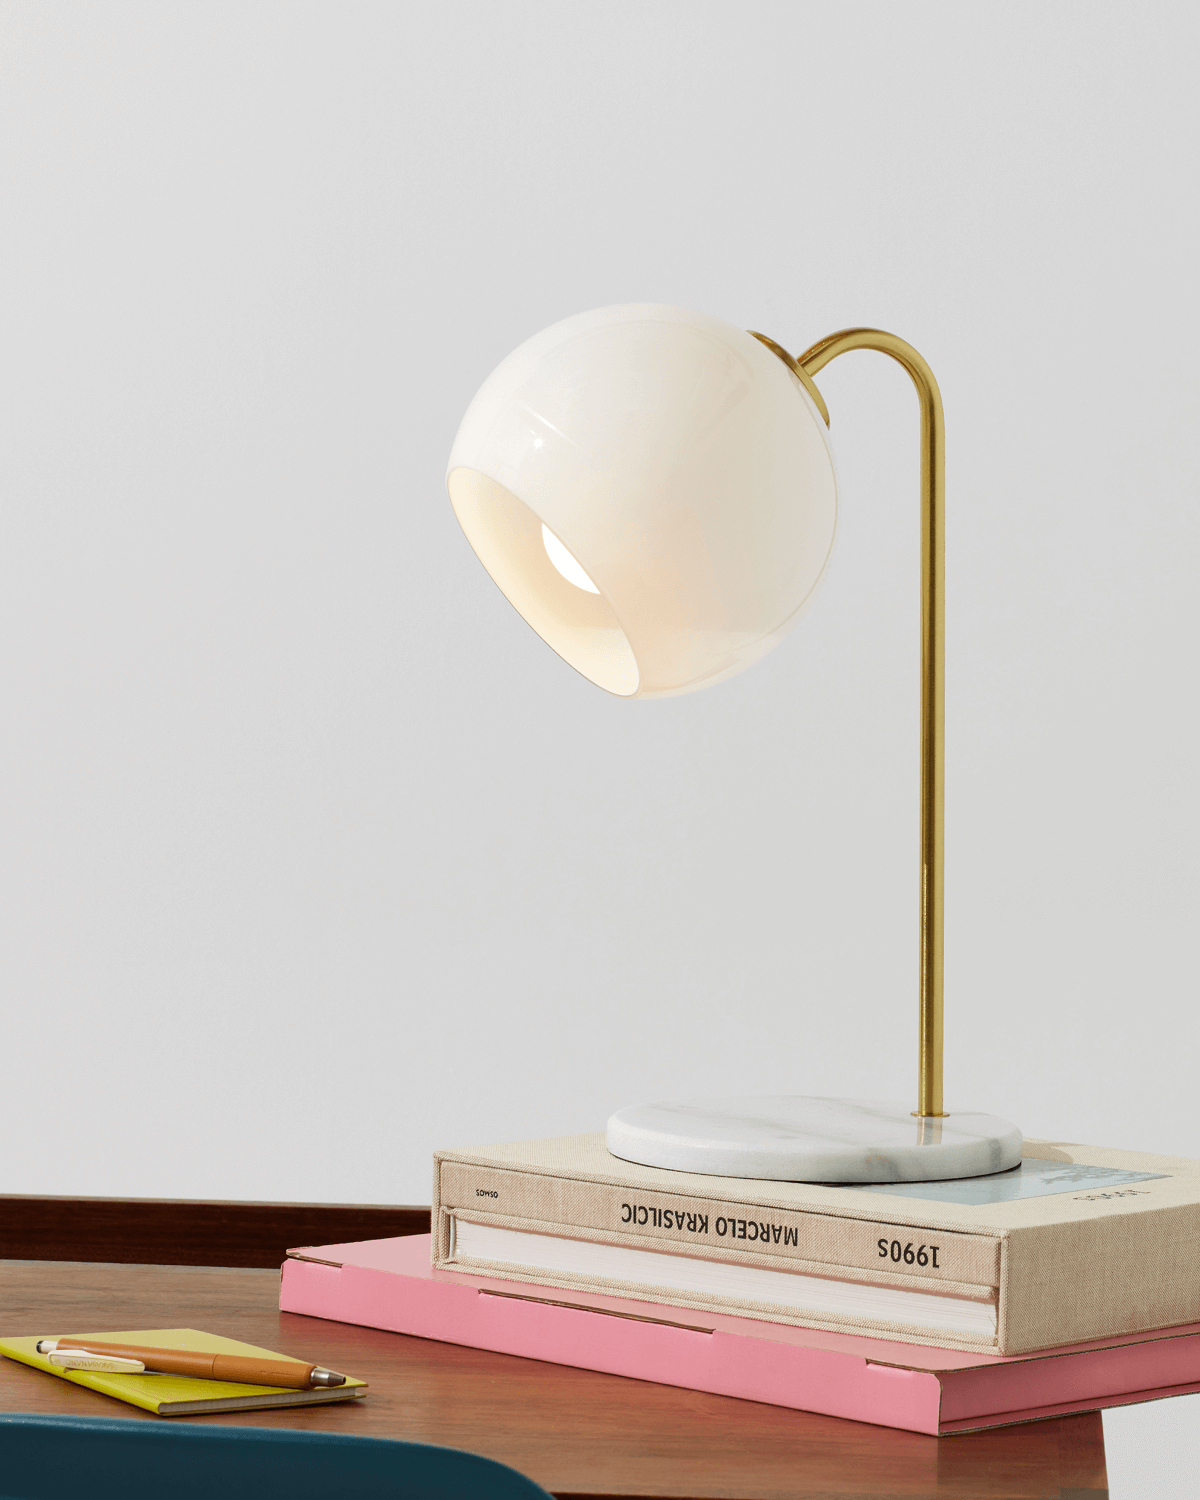 Krystal Table Lamp